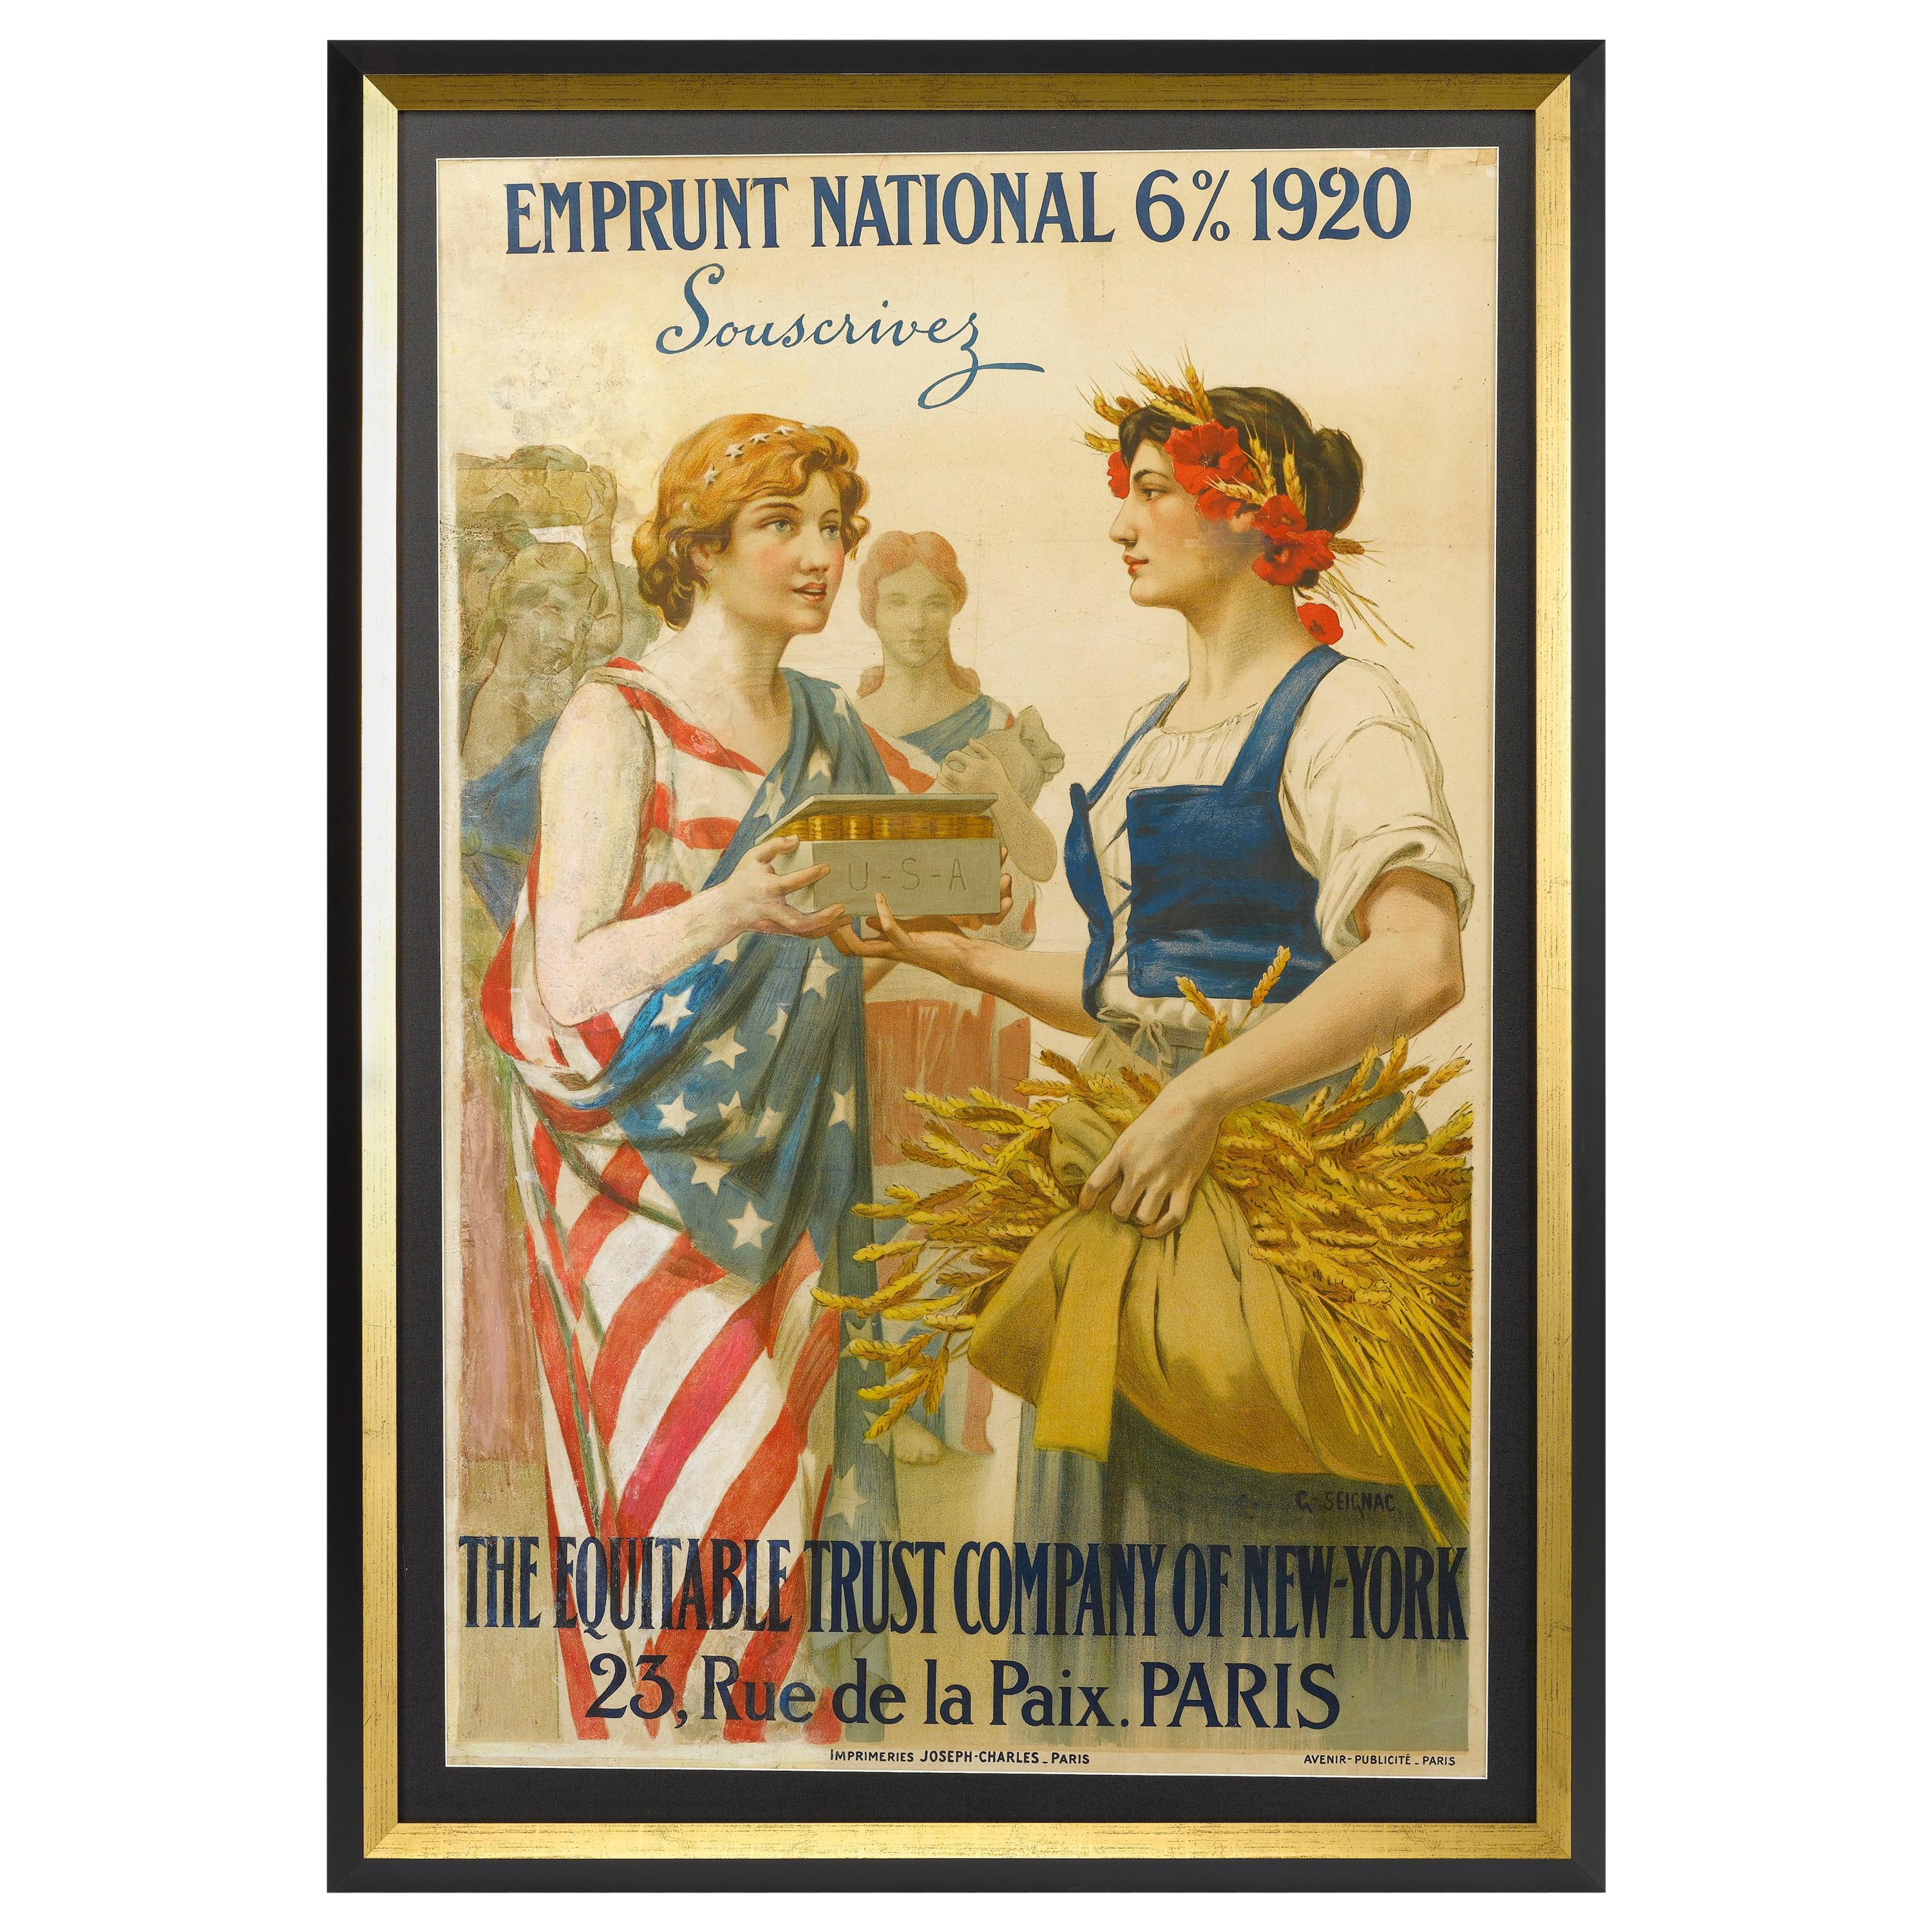 Paris 6% Emprunt National 1920 Poster by G. Seignac, circa 1920